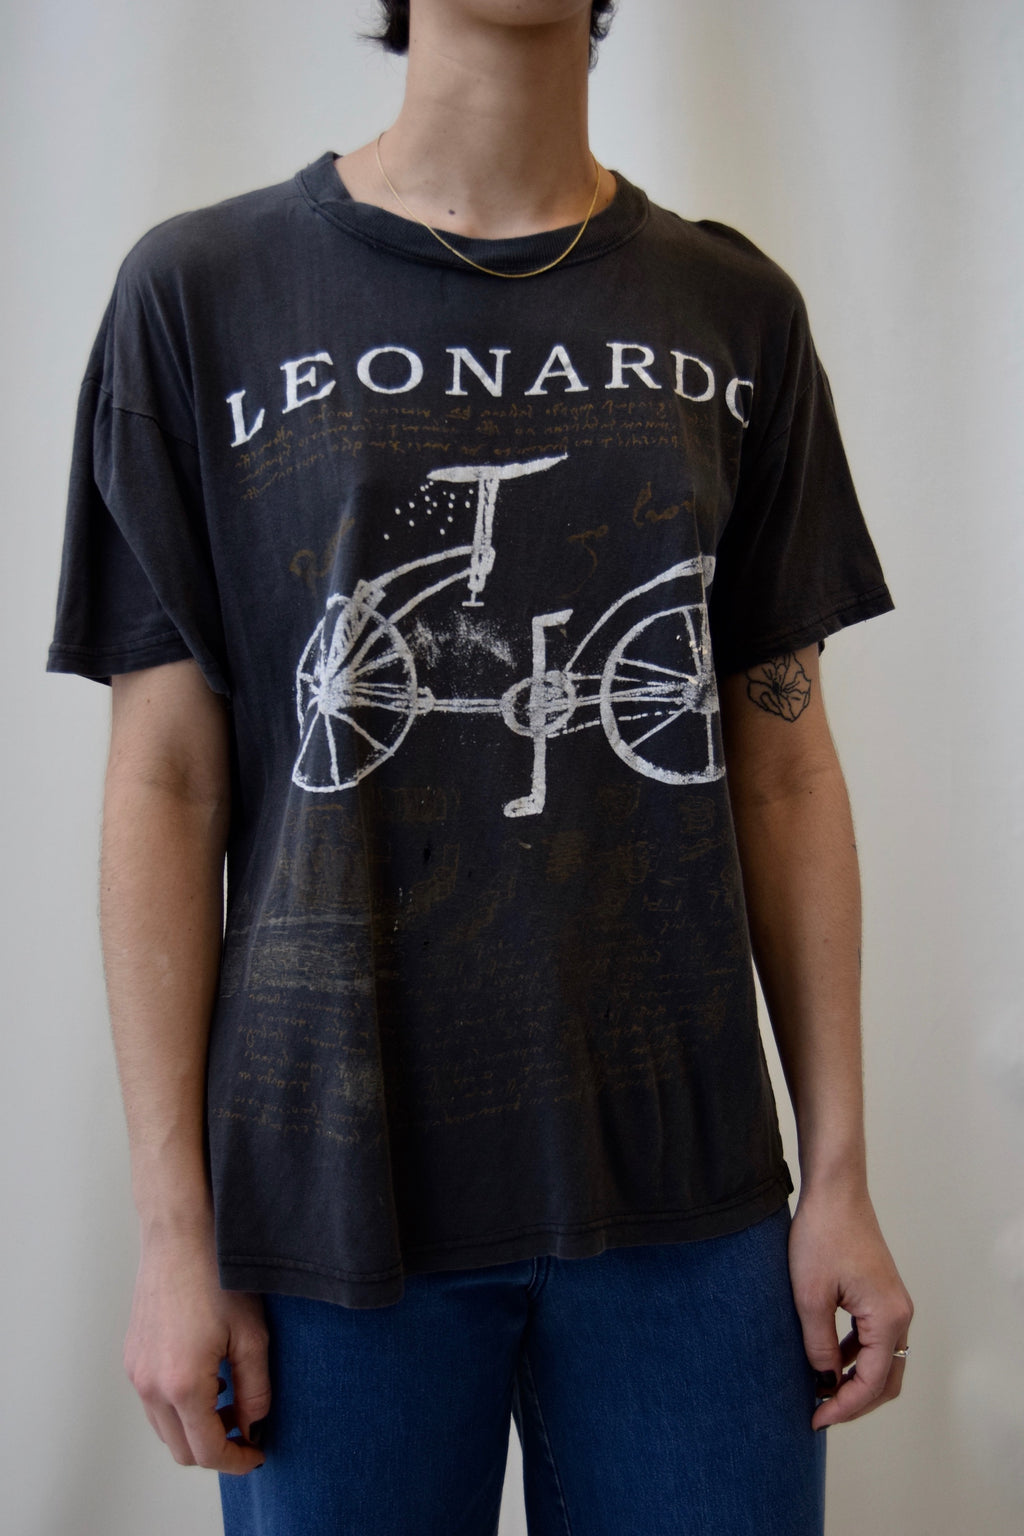 Leonardo Da Vinci Bicycle T-Shirt